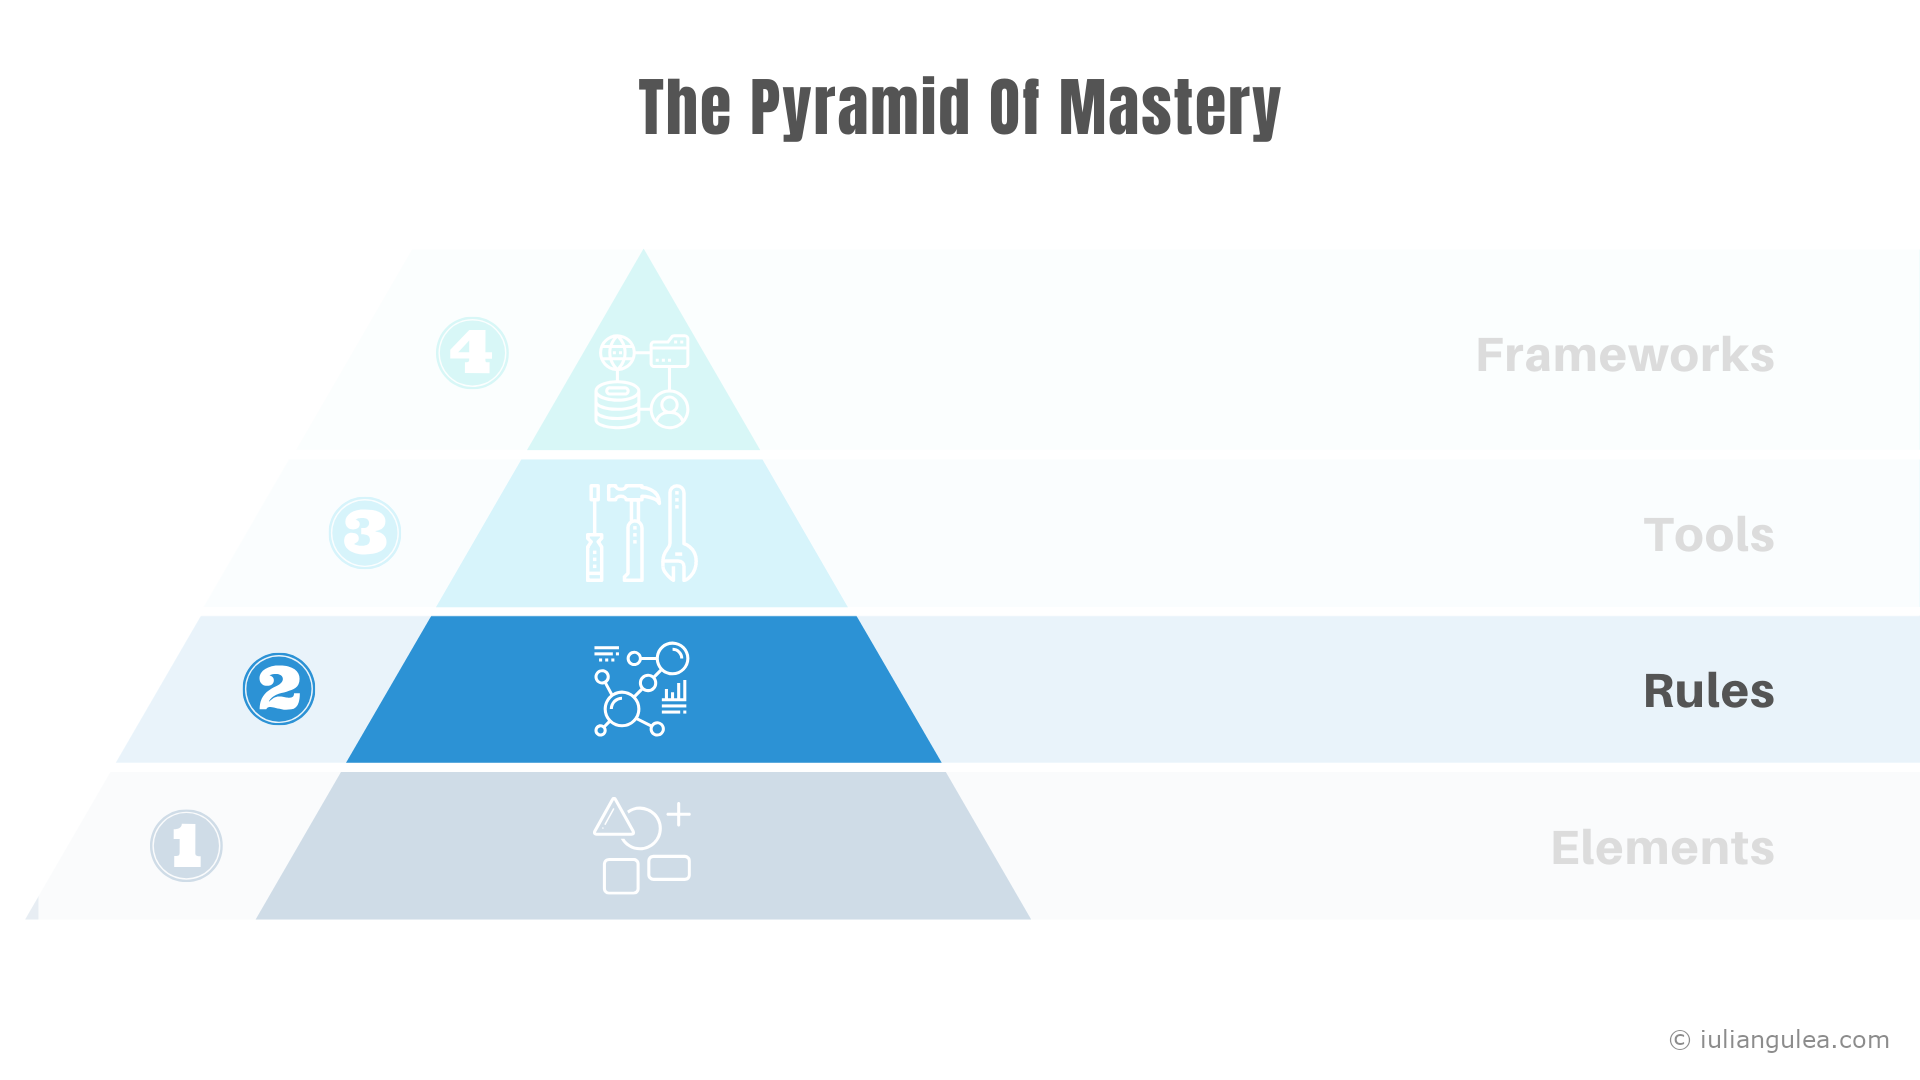 Pyramid of Mastery - Rules